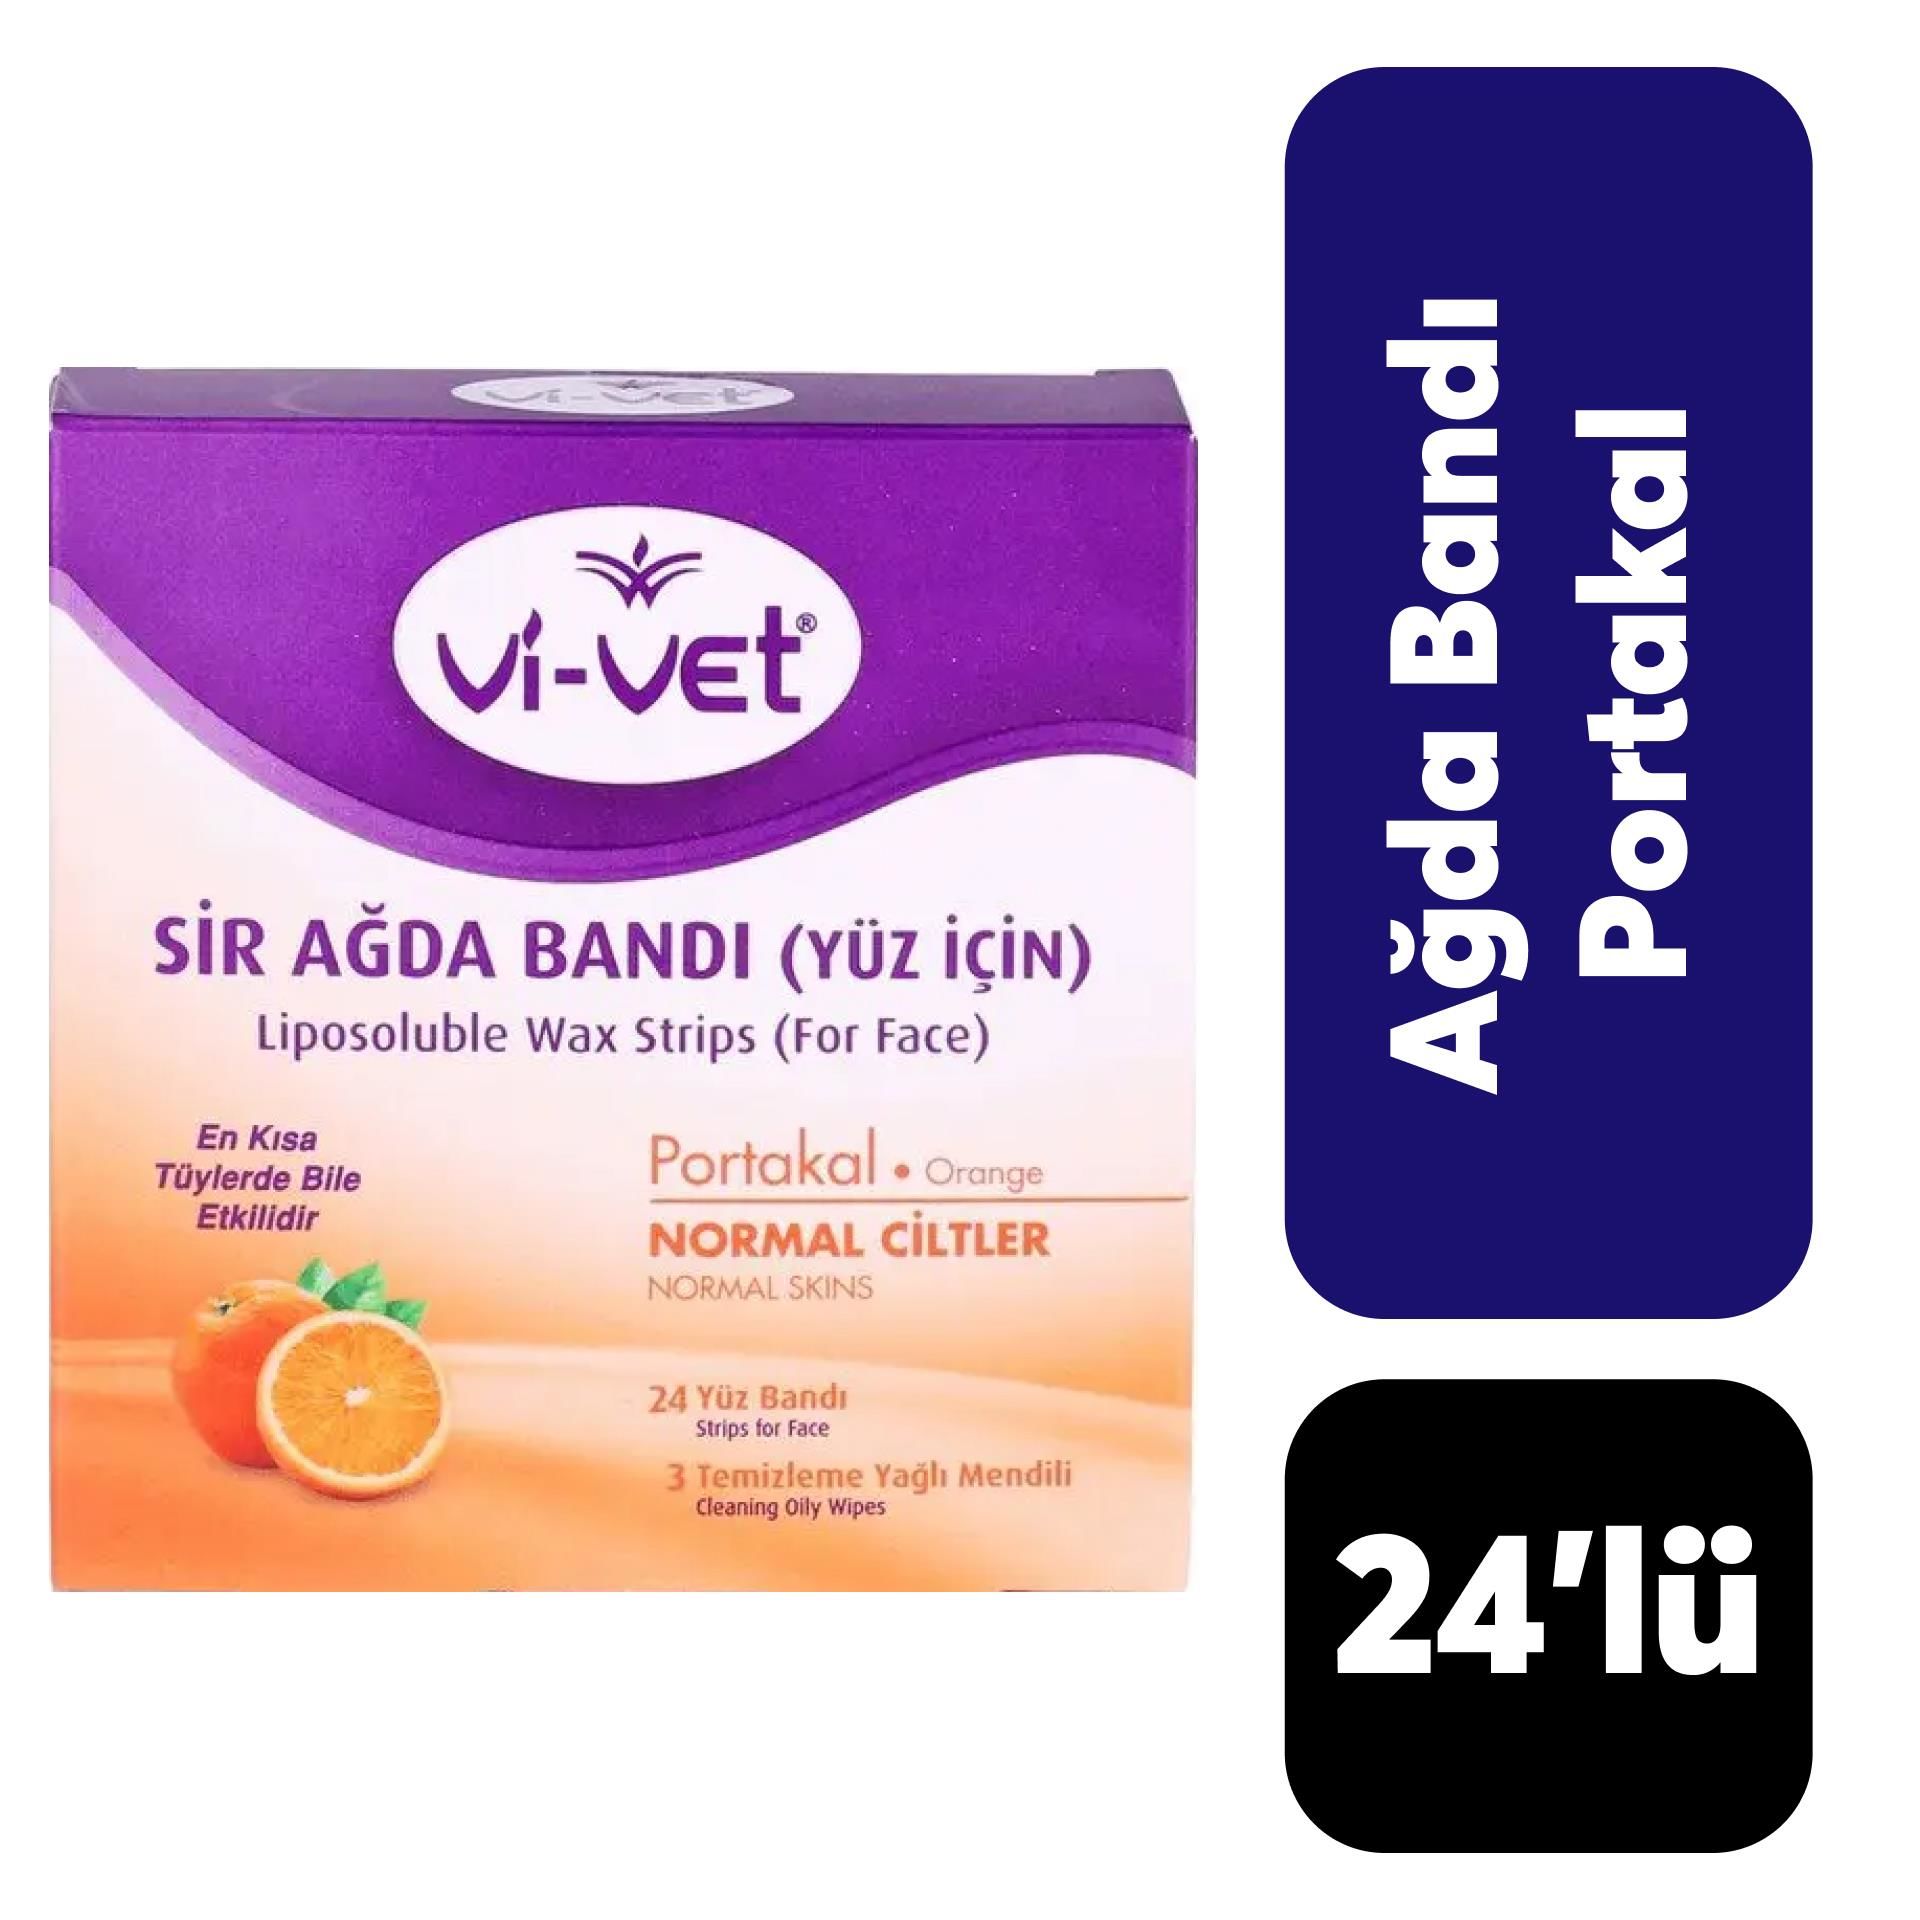 Vi-vet Sir Ağda Bandı 24'lü Portakal Yüz